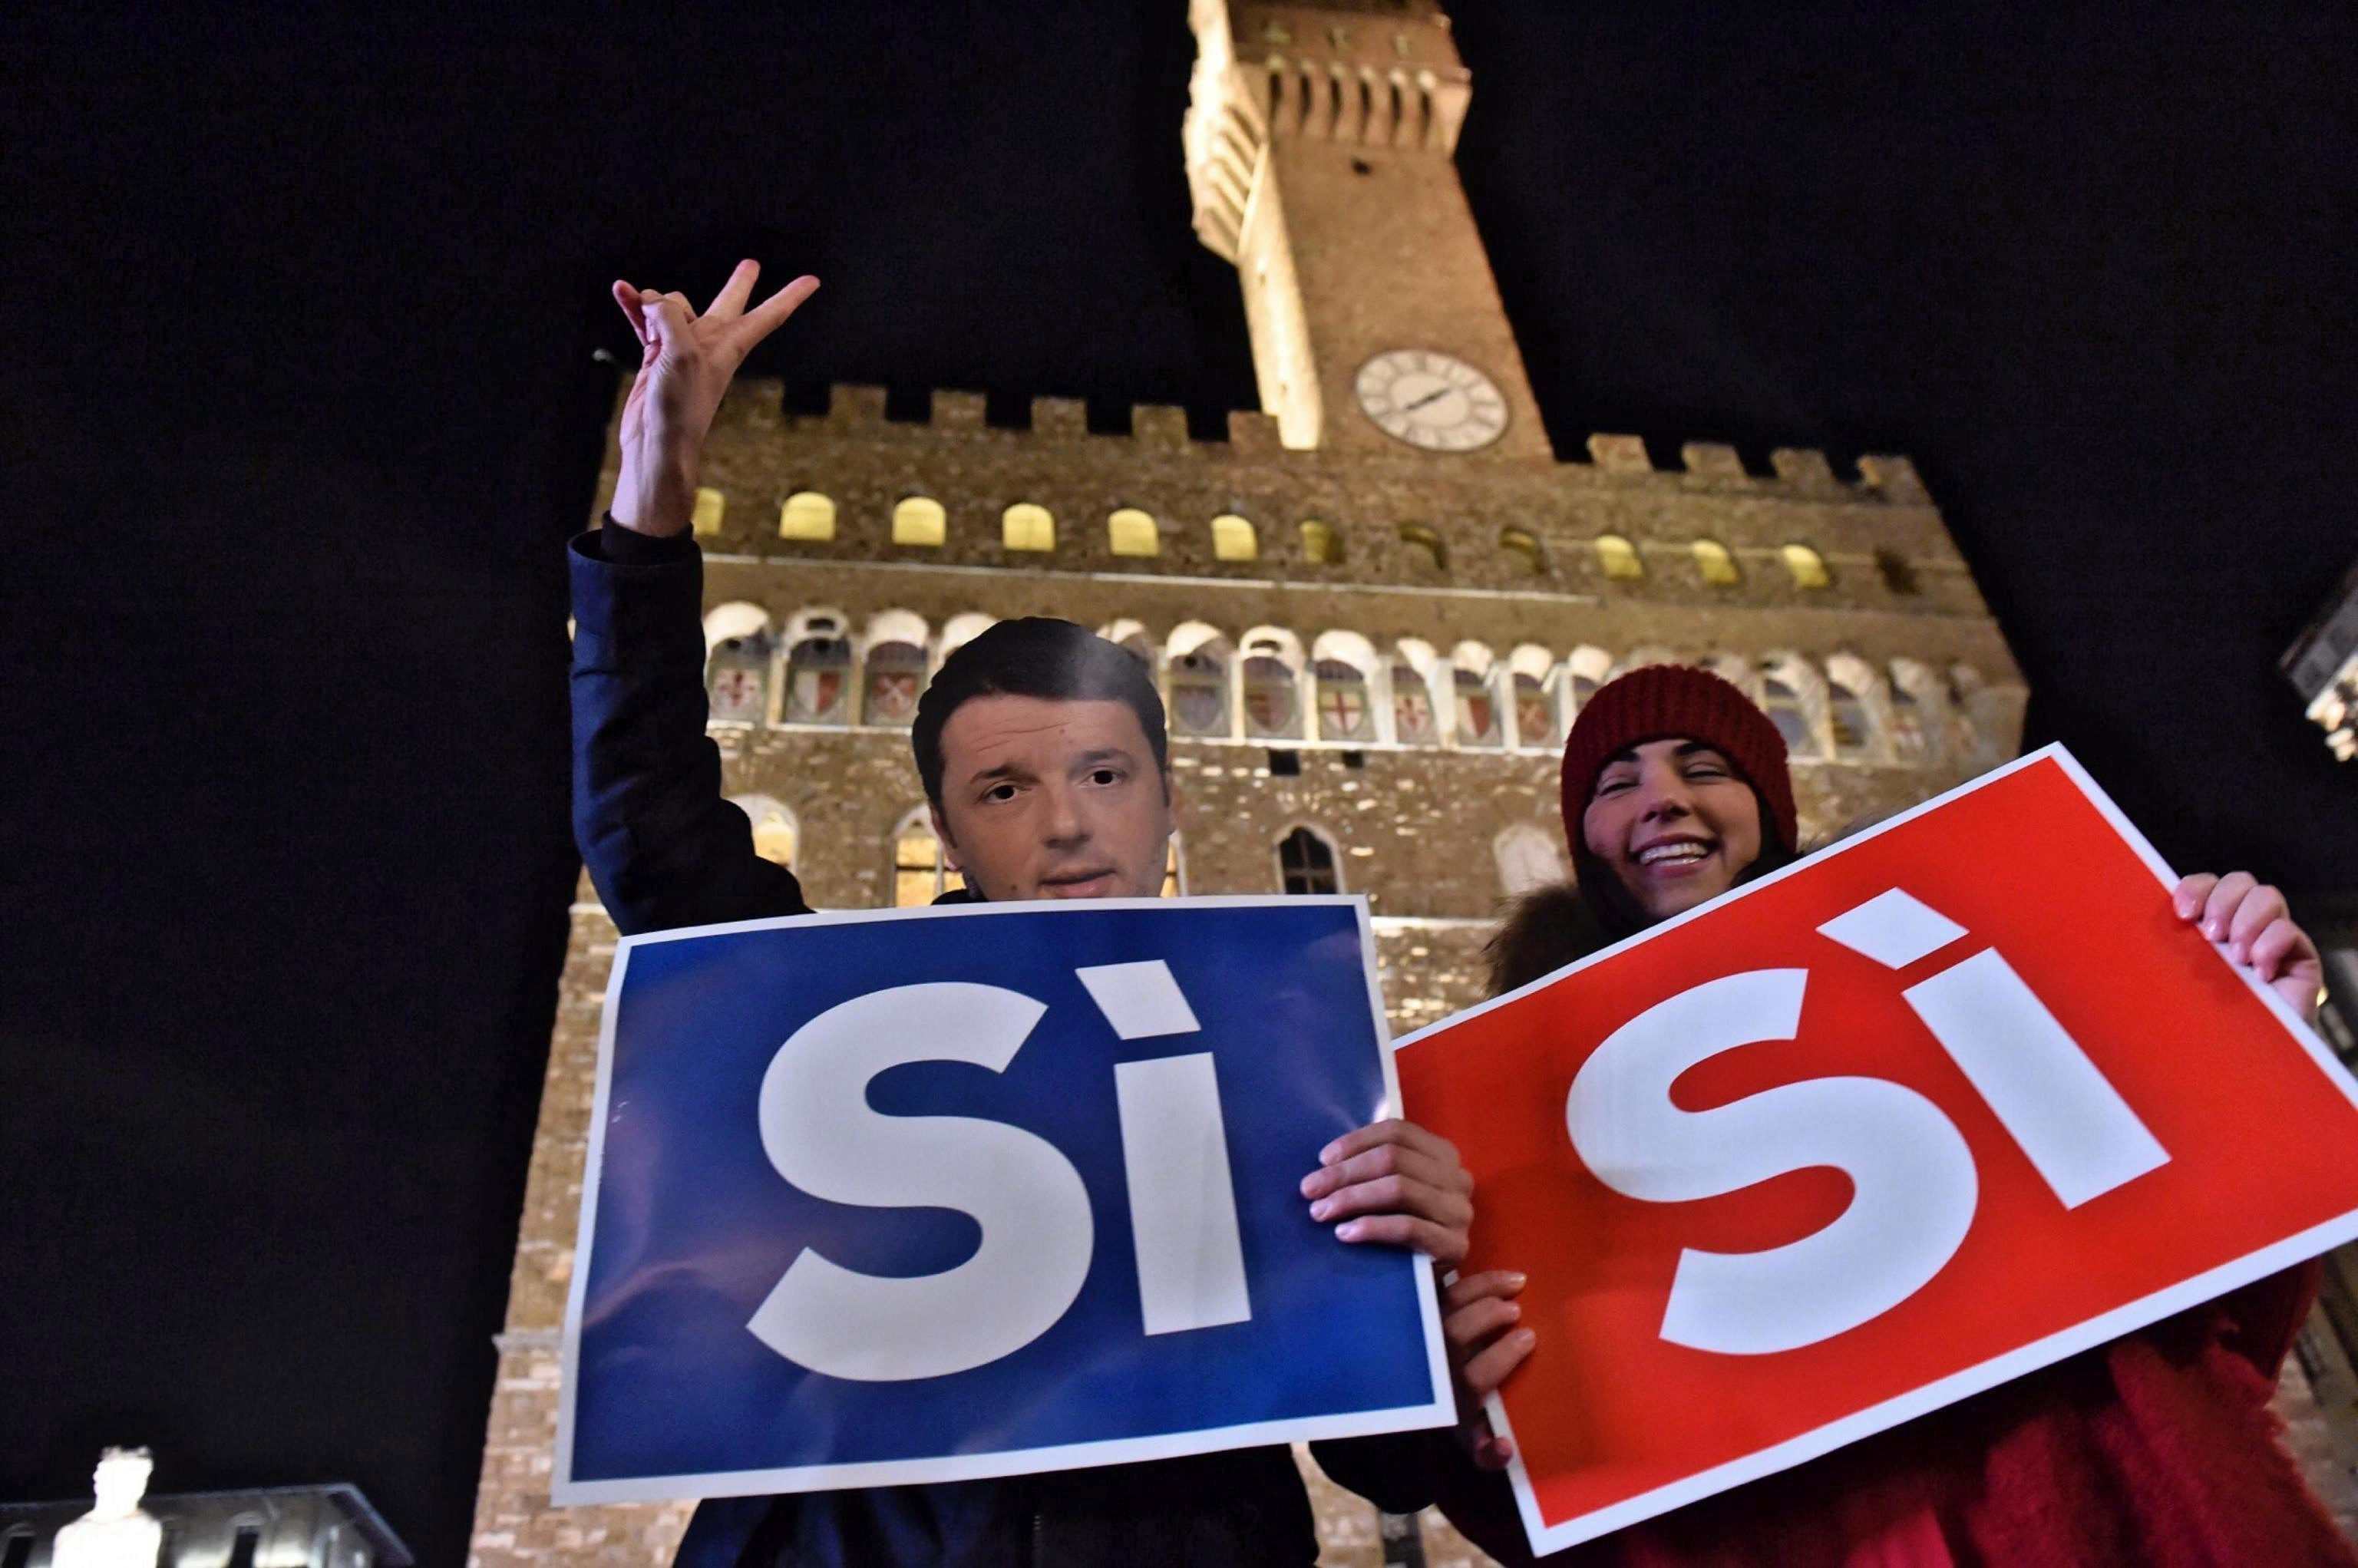 El referéndum constitucional, un inevitable plebiscito sobre Renzi